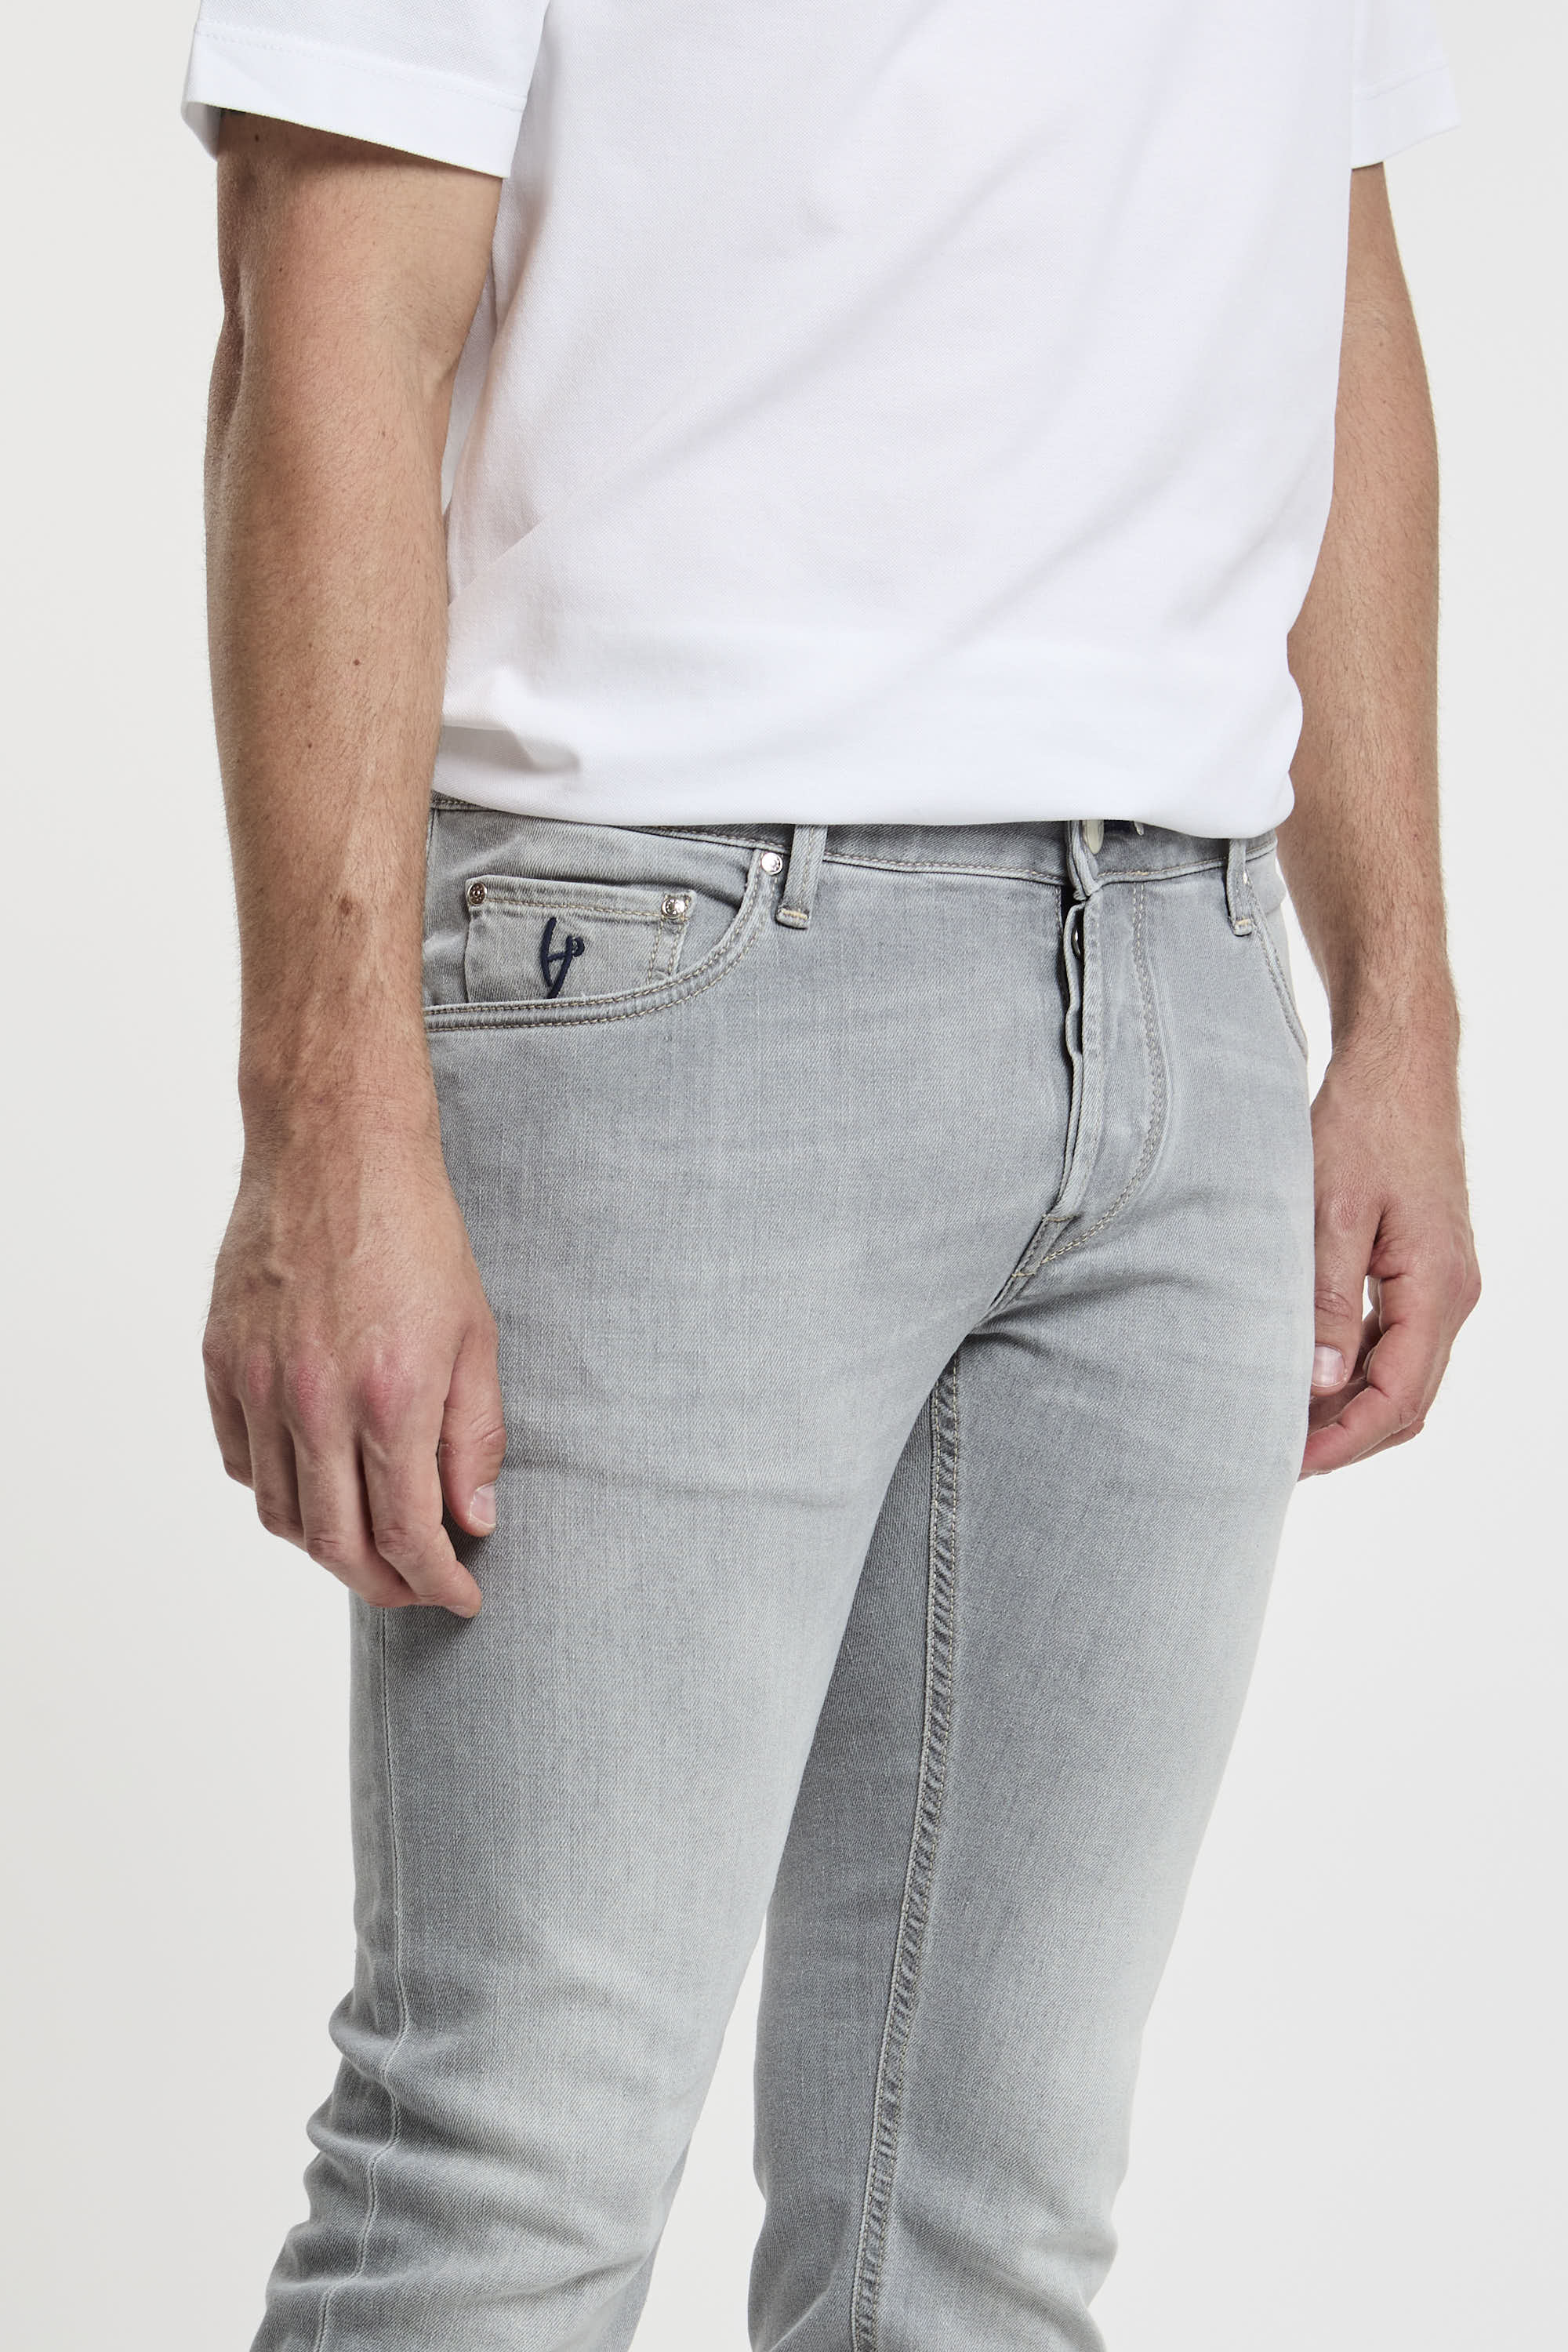 Handpicked Jeans Orvieto Cotton Grey-4